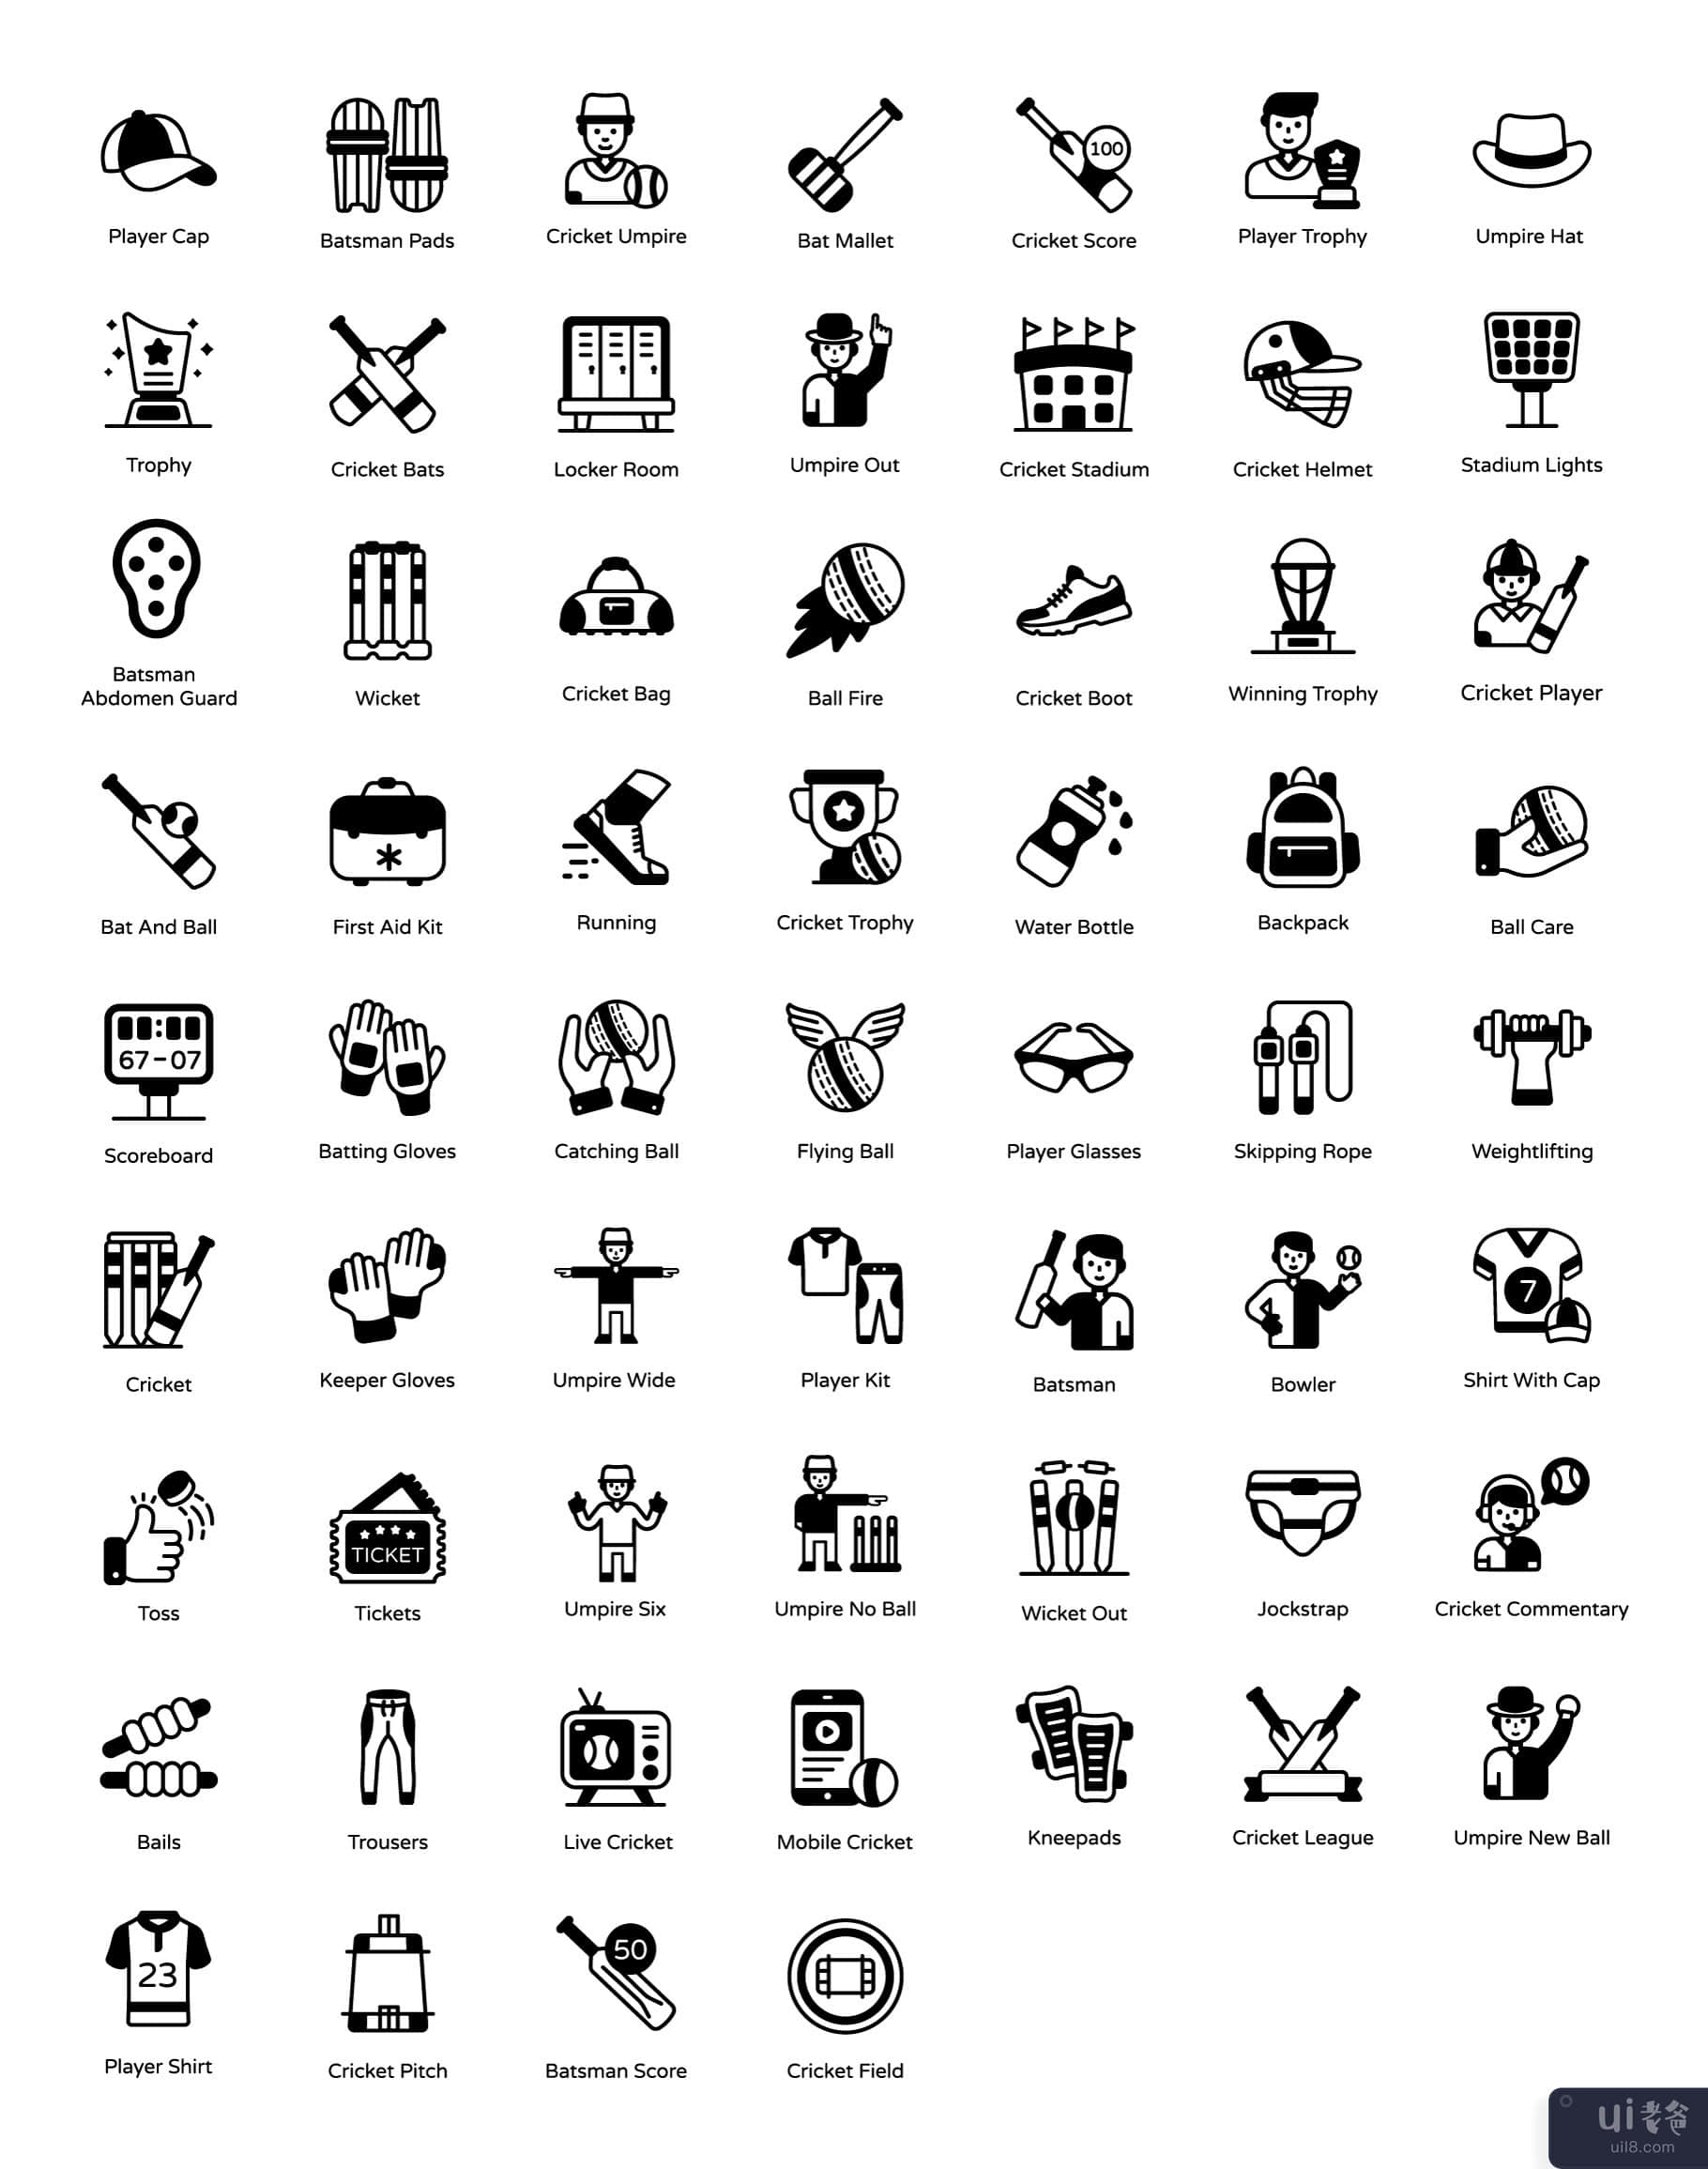 60 个板球设备字形图标(60 Cricket Equipment Glyph Icons)插图2